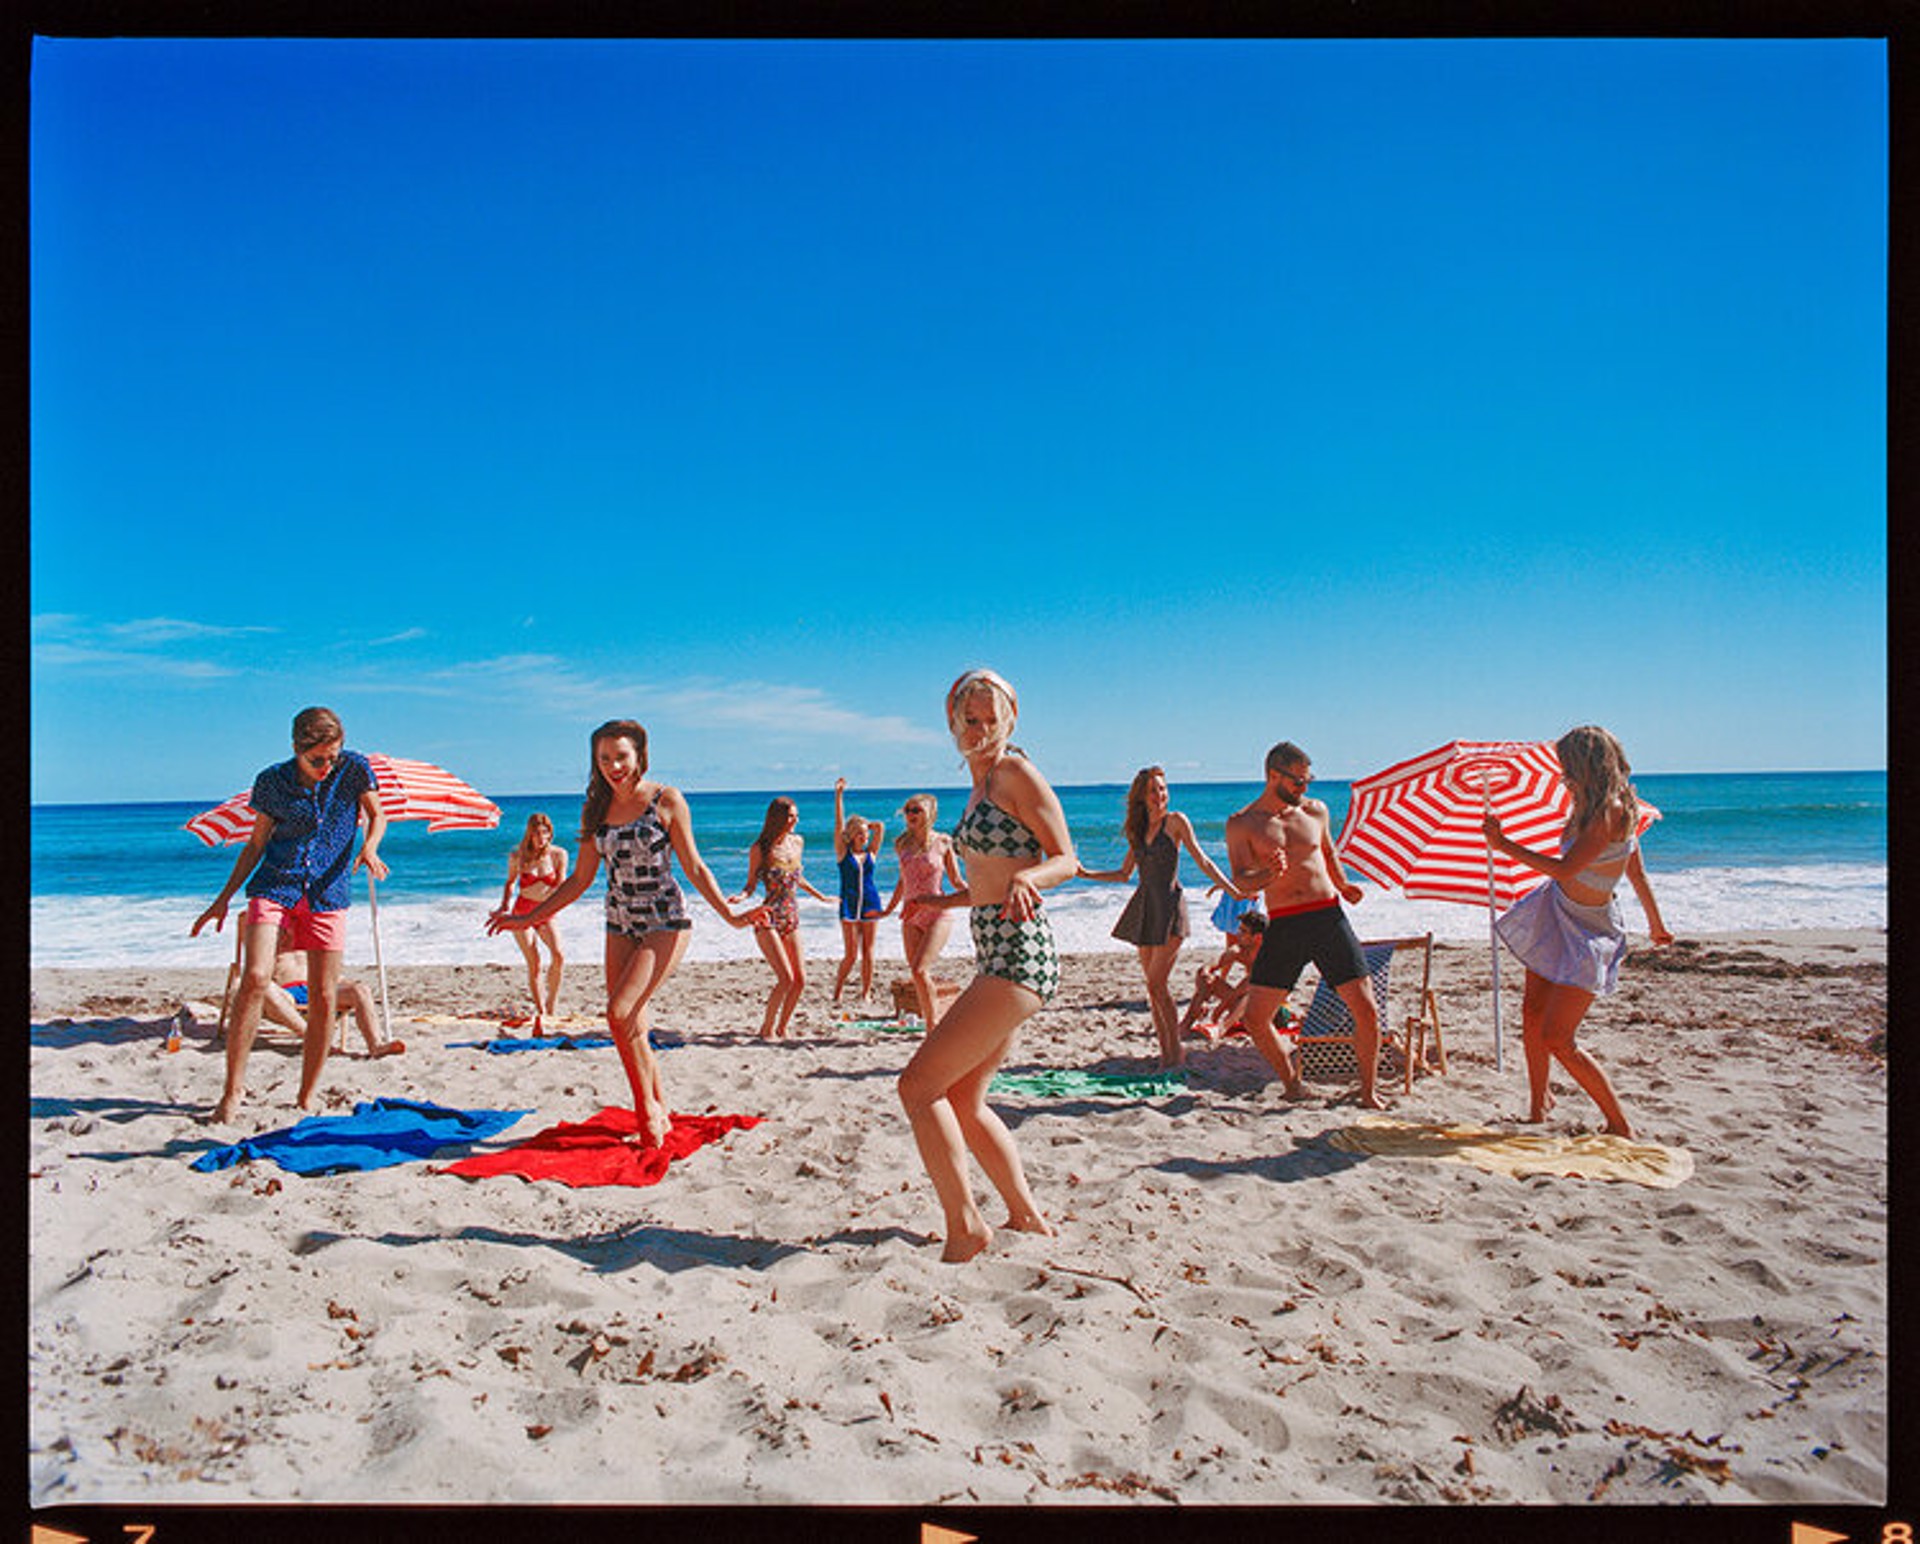 Beach Party by Tyler Shields